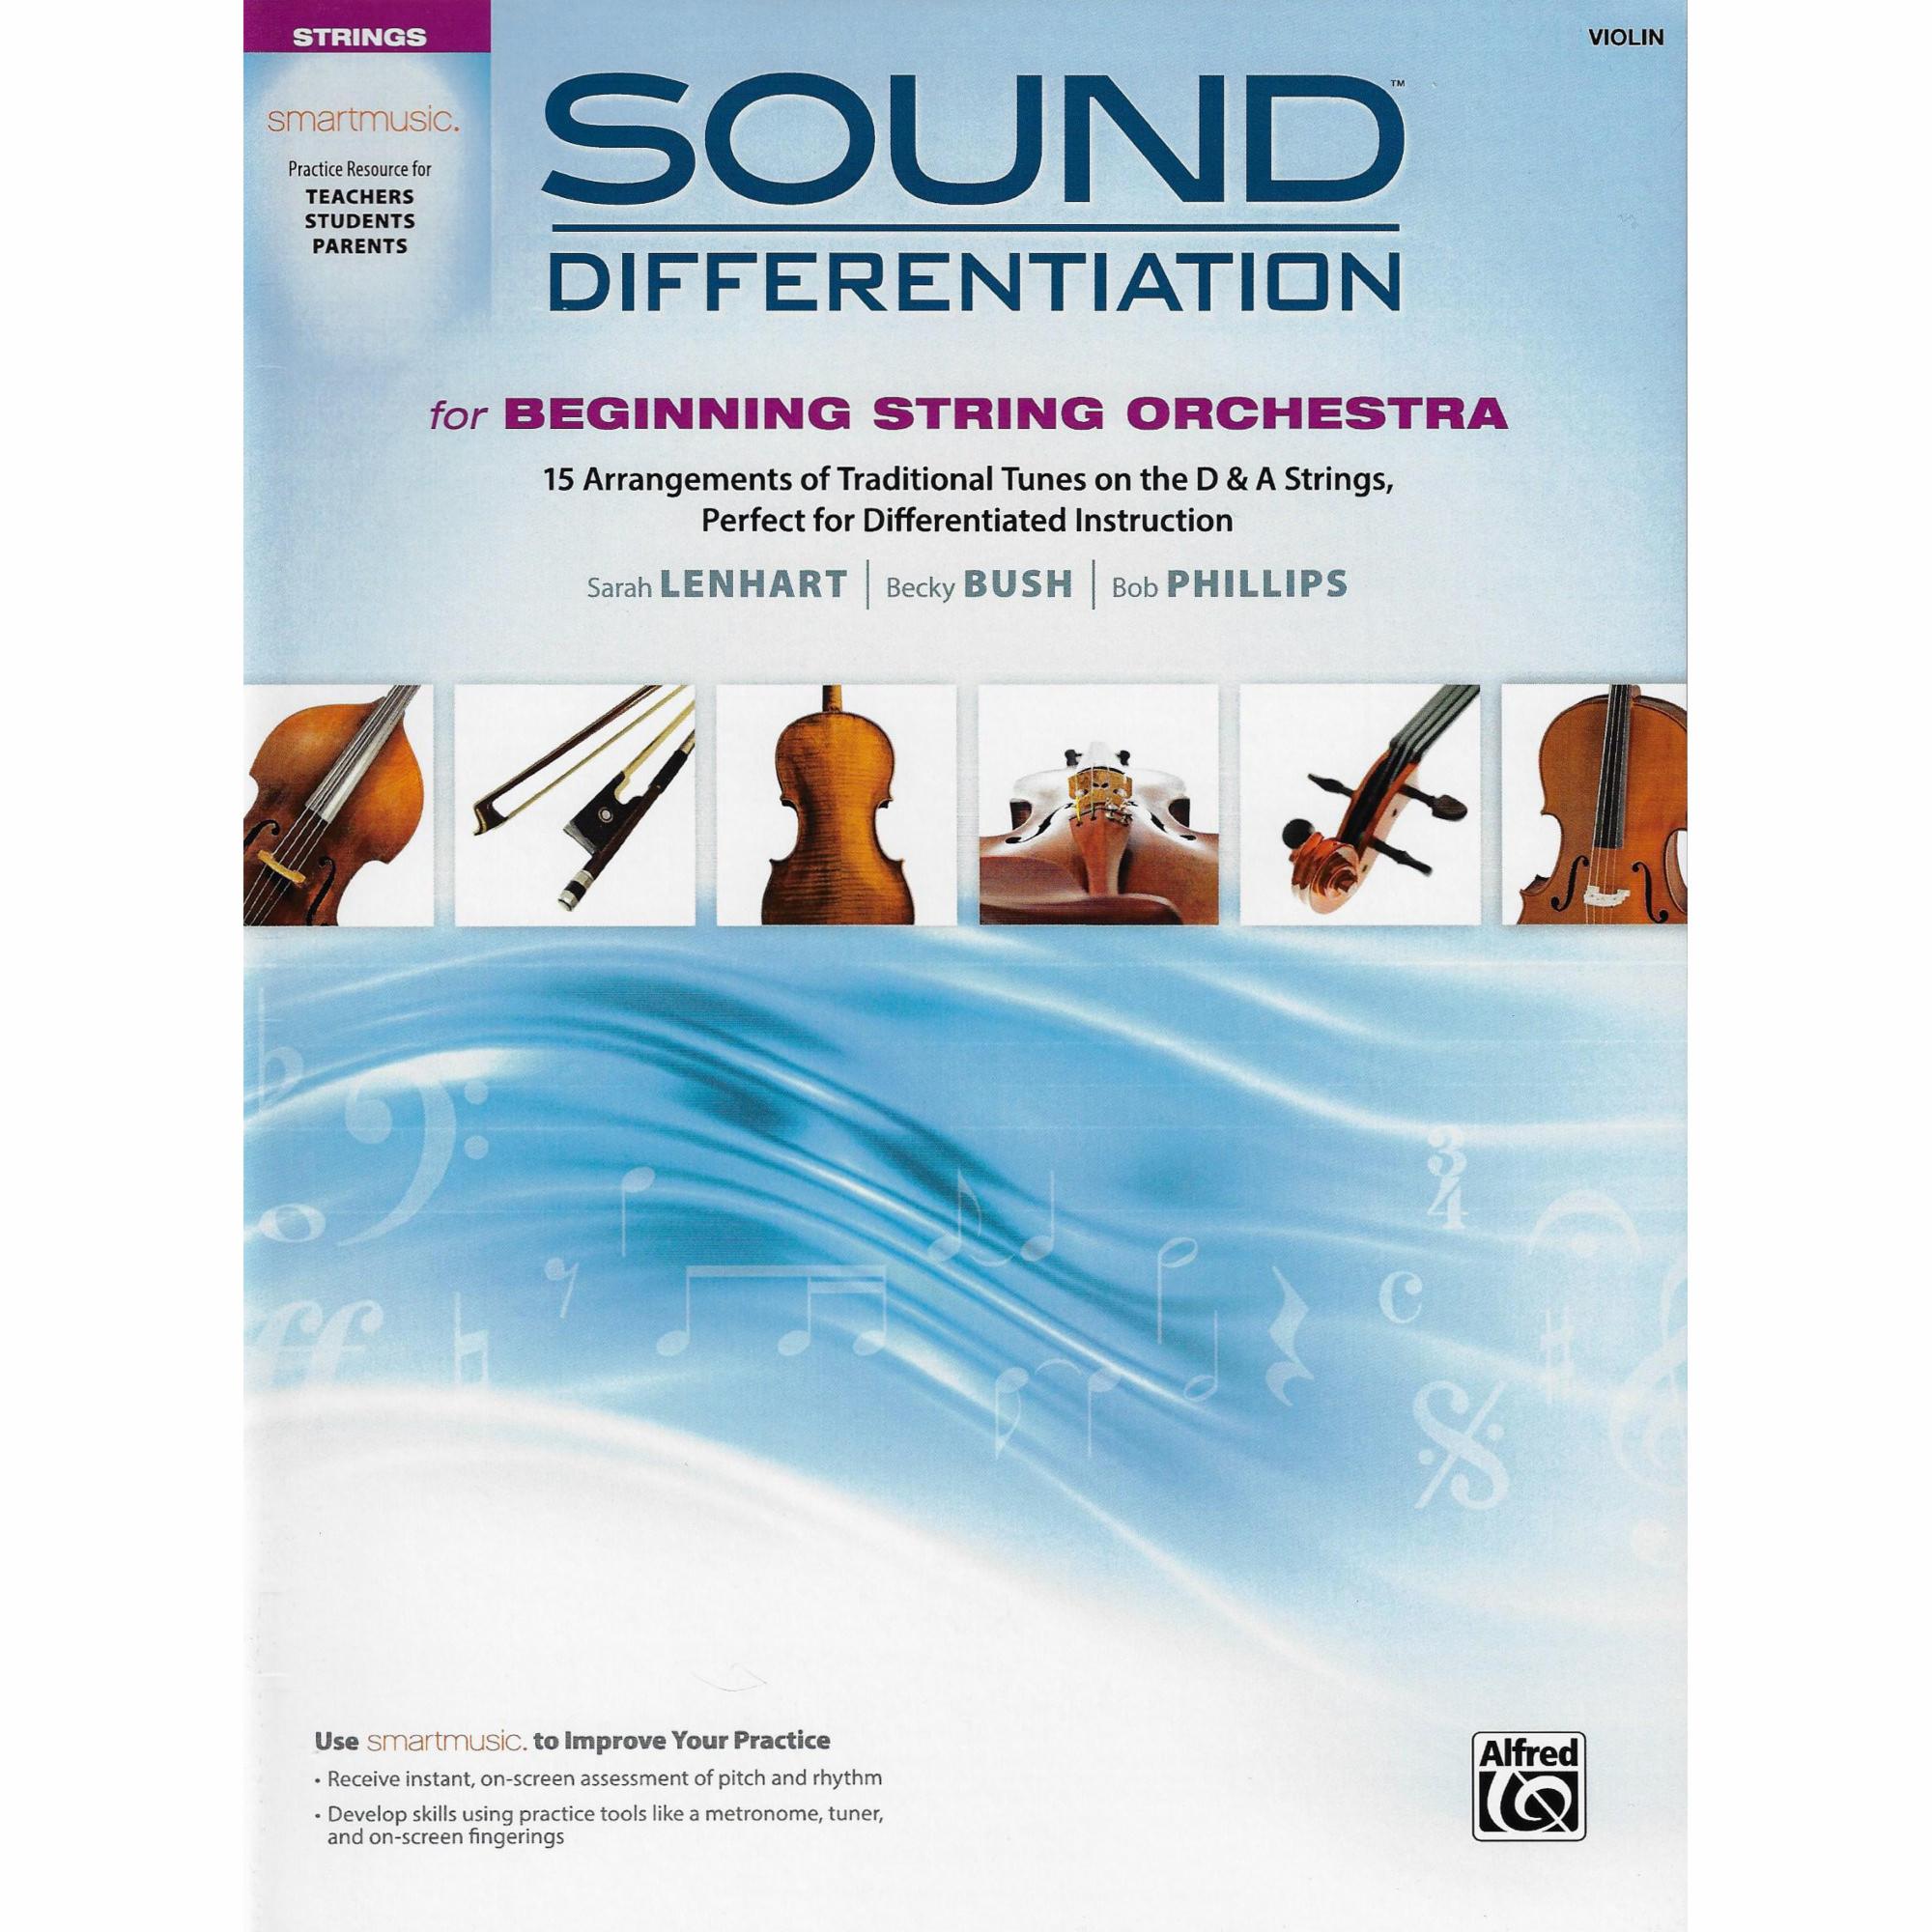 Sound Differentiation for Beginning String Orchestra